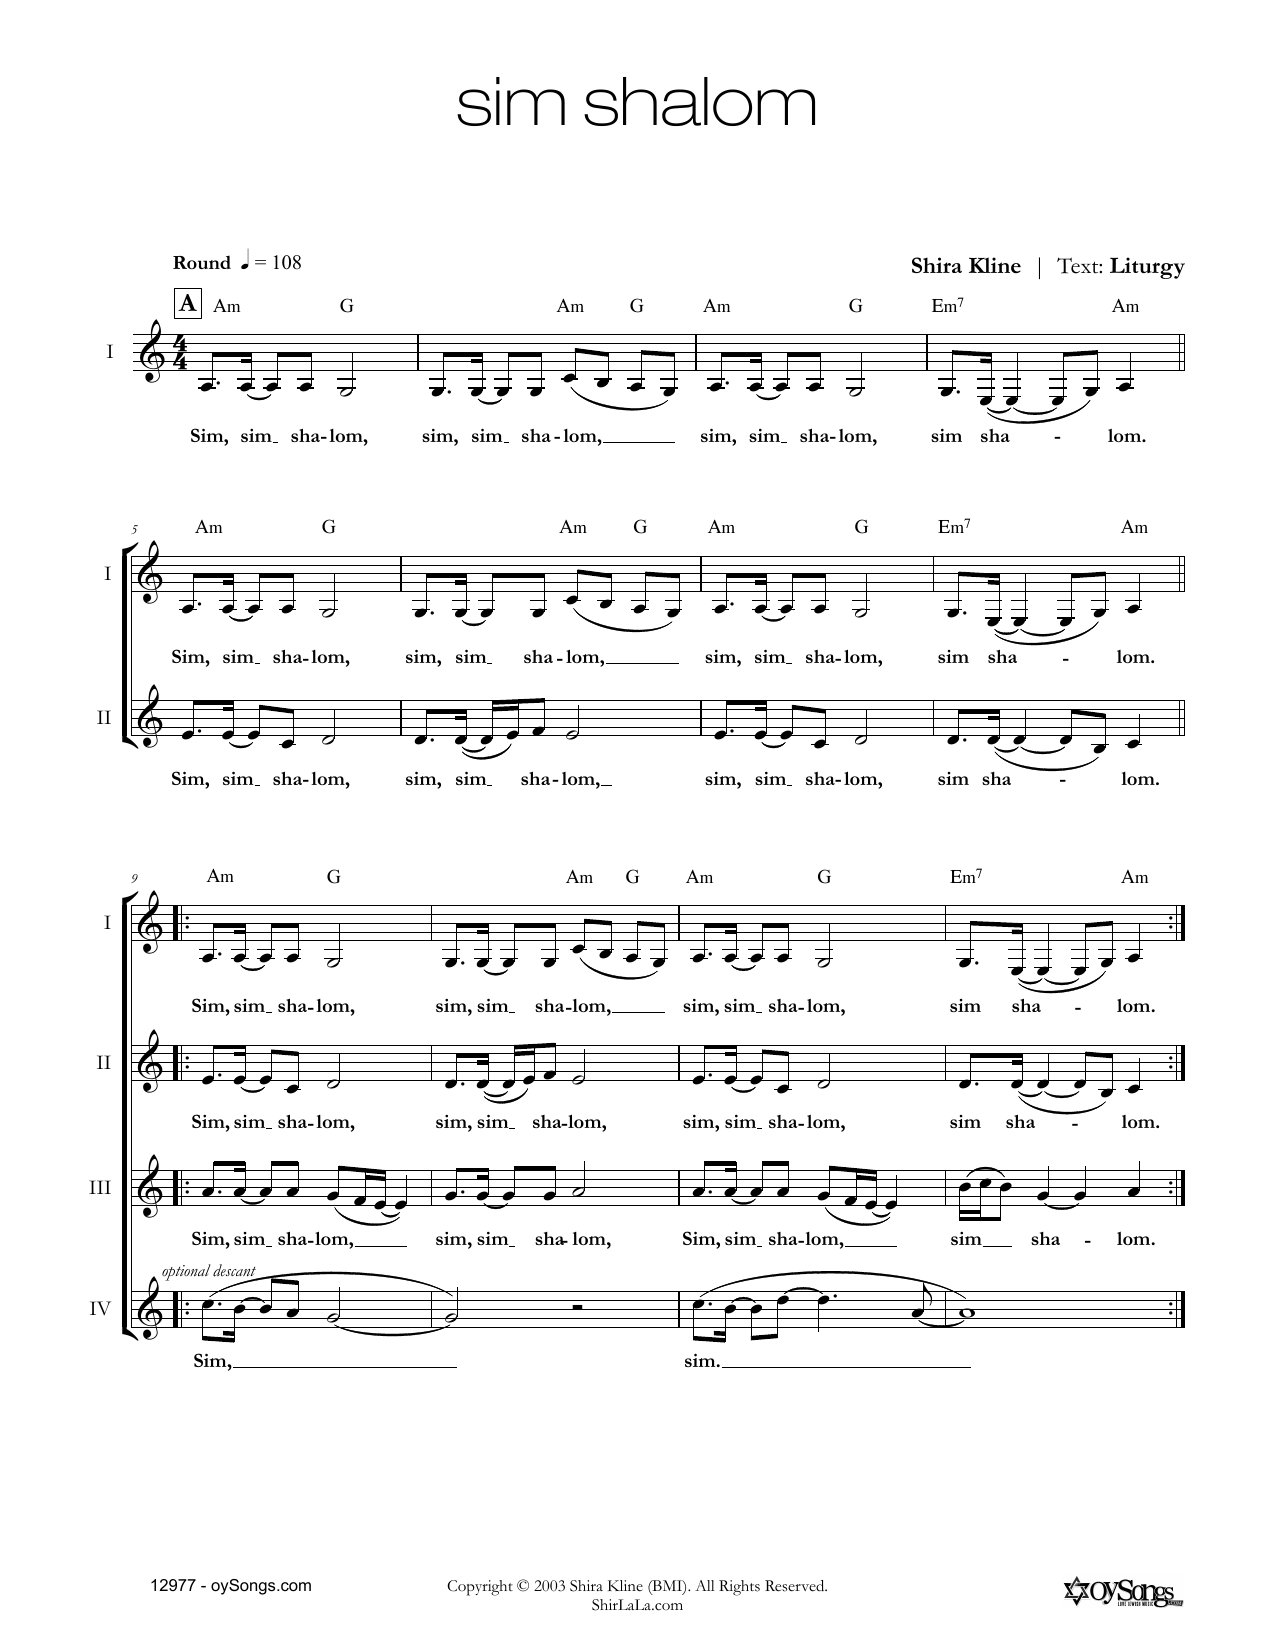 Shira Kline Sim Shalom Sheet Music Notes & Chords for Real Book – Melody, Lyrics & Chords - Download or Print PDF